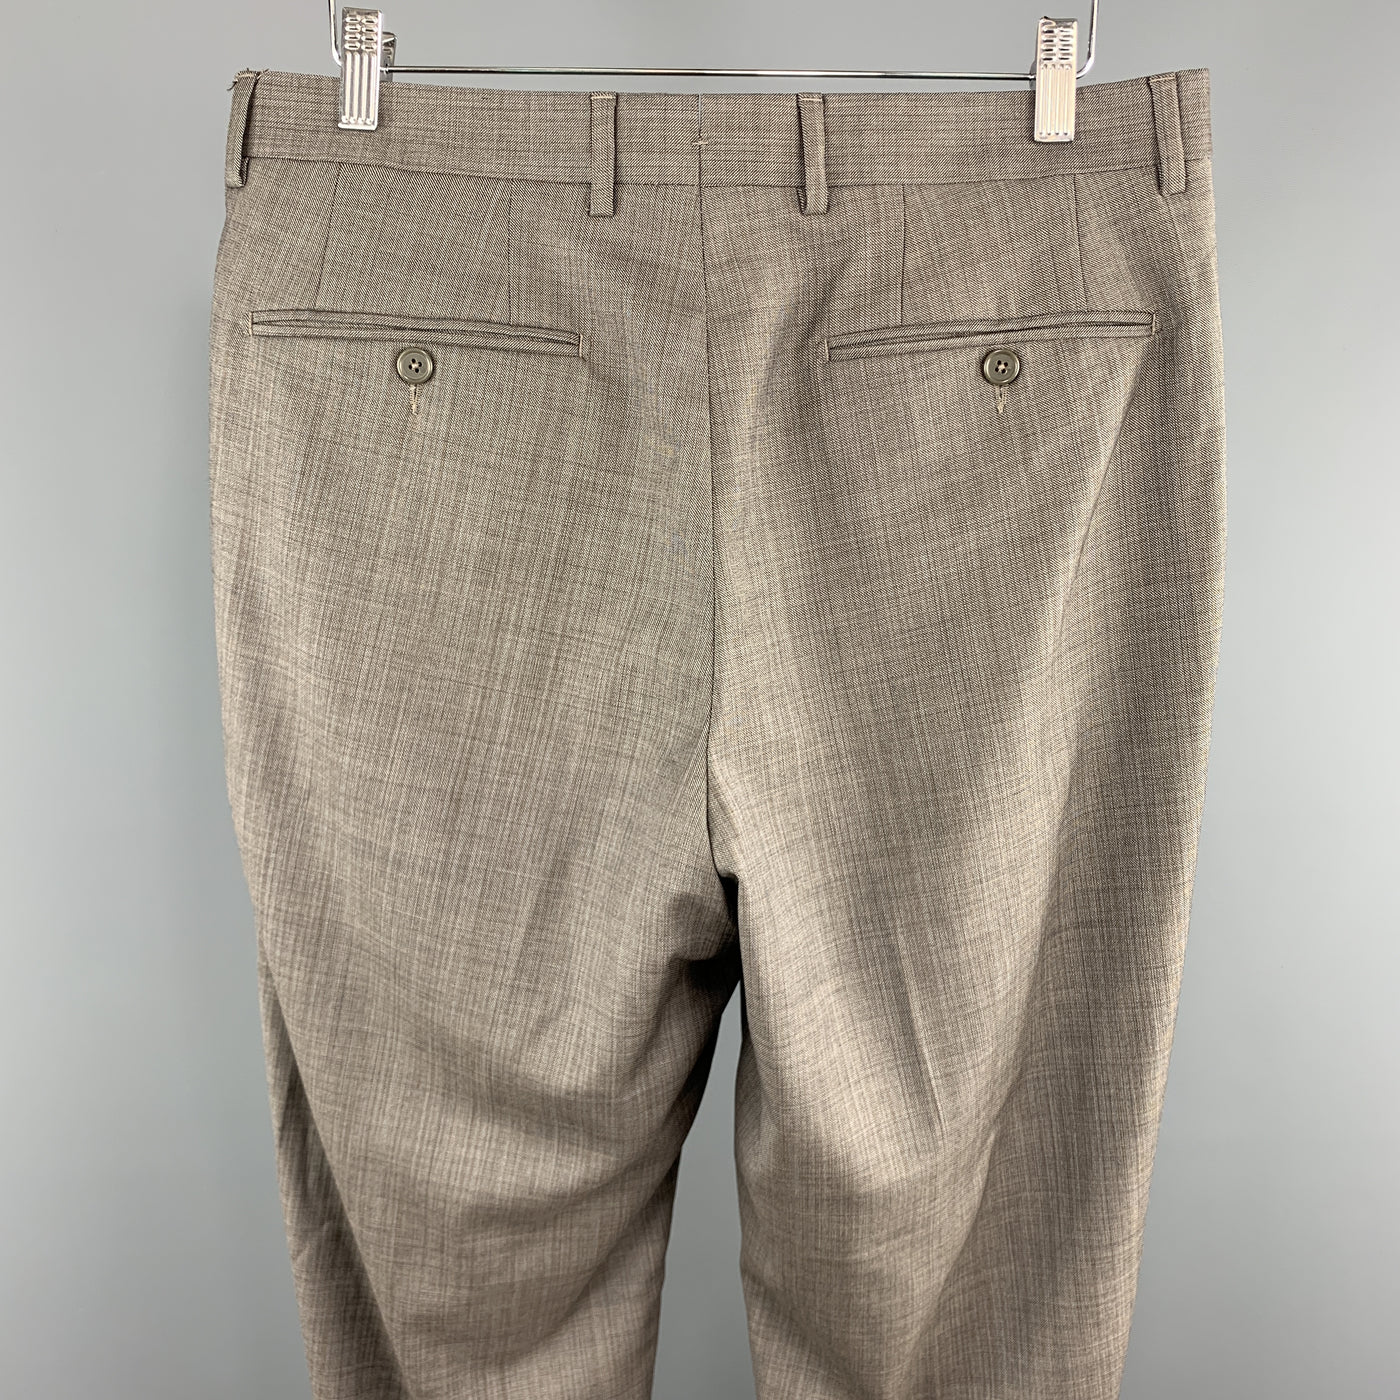 SANTORELLI Size 33 x 35 Taupe Grid Wool Zip Fly Dress Pants